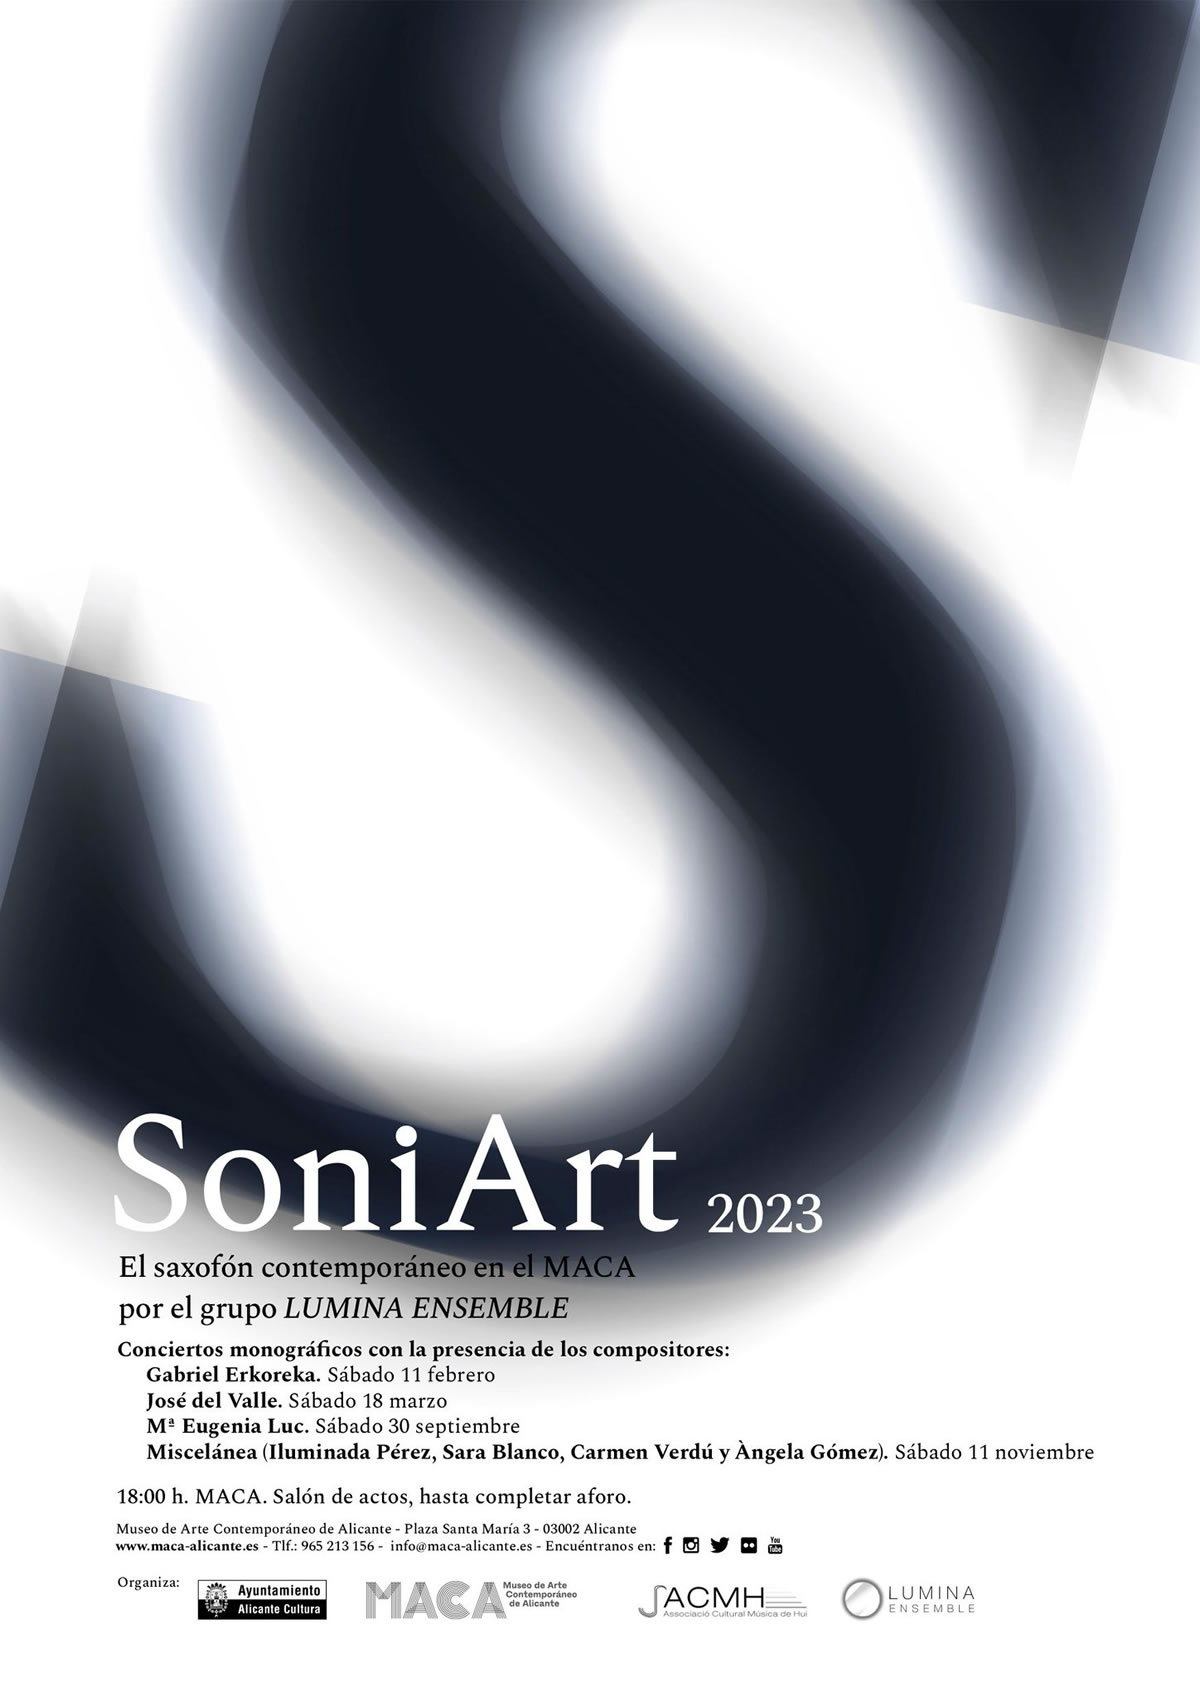 Soniart MACA 2023